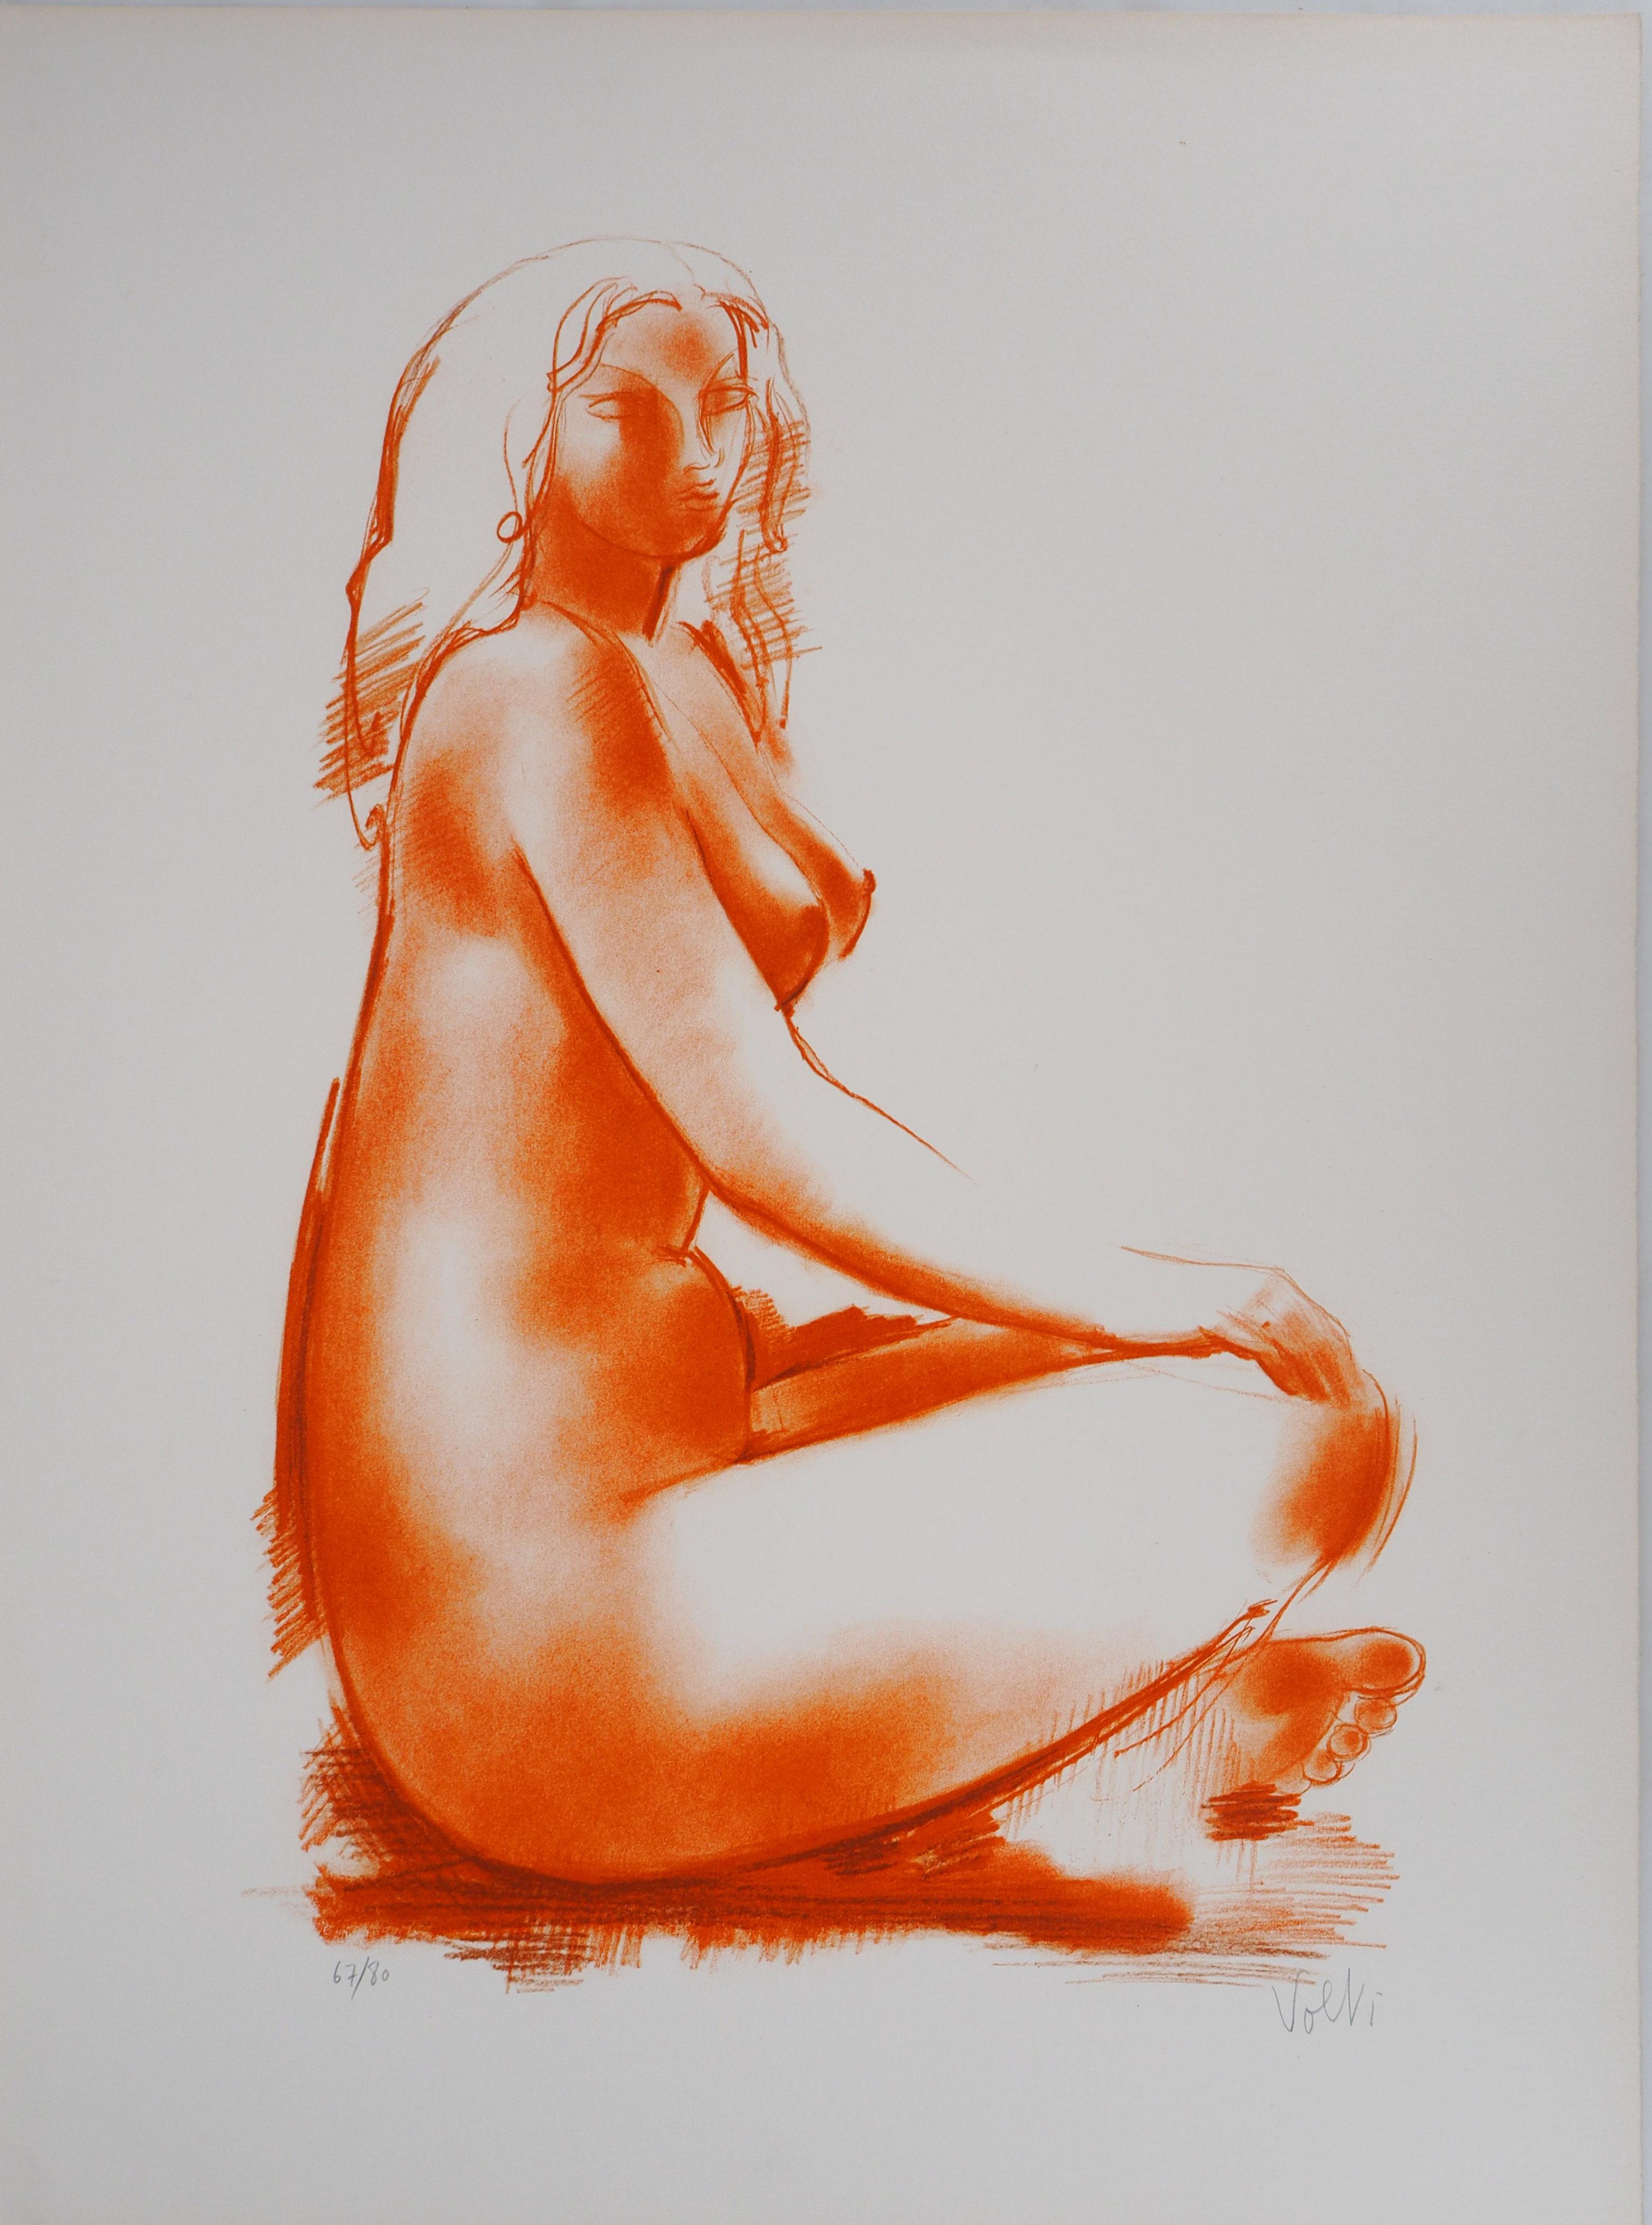 Antoniucci Volti Nude Print - Seated Model - Original Signed Lithograph